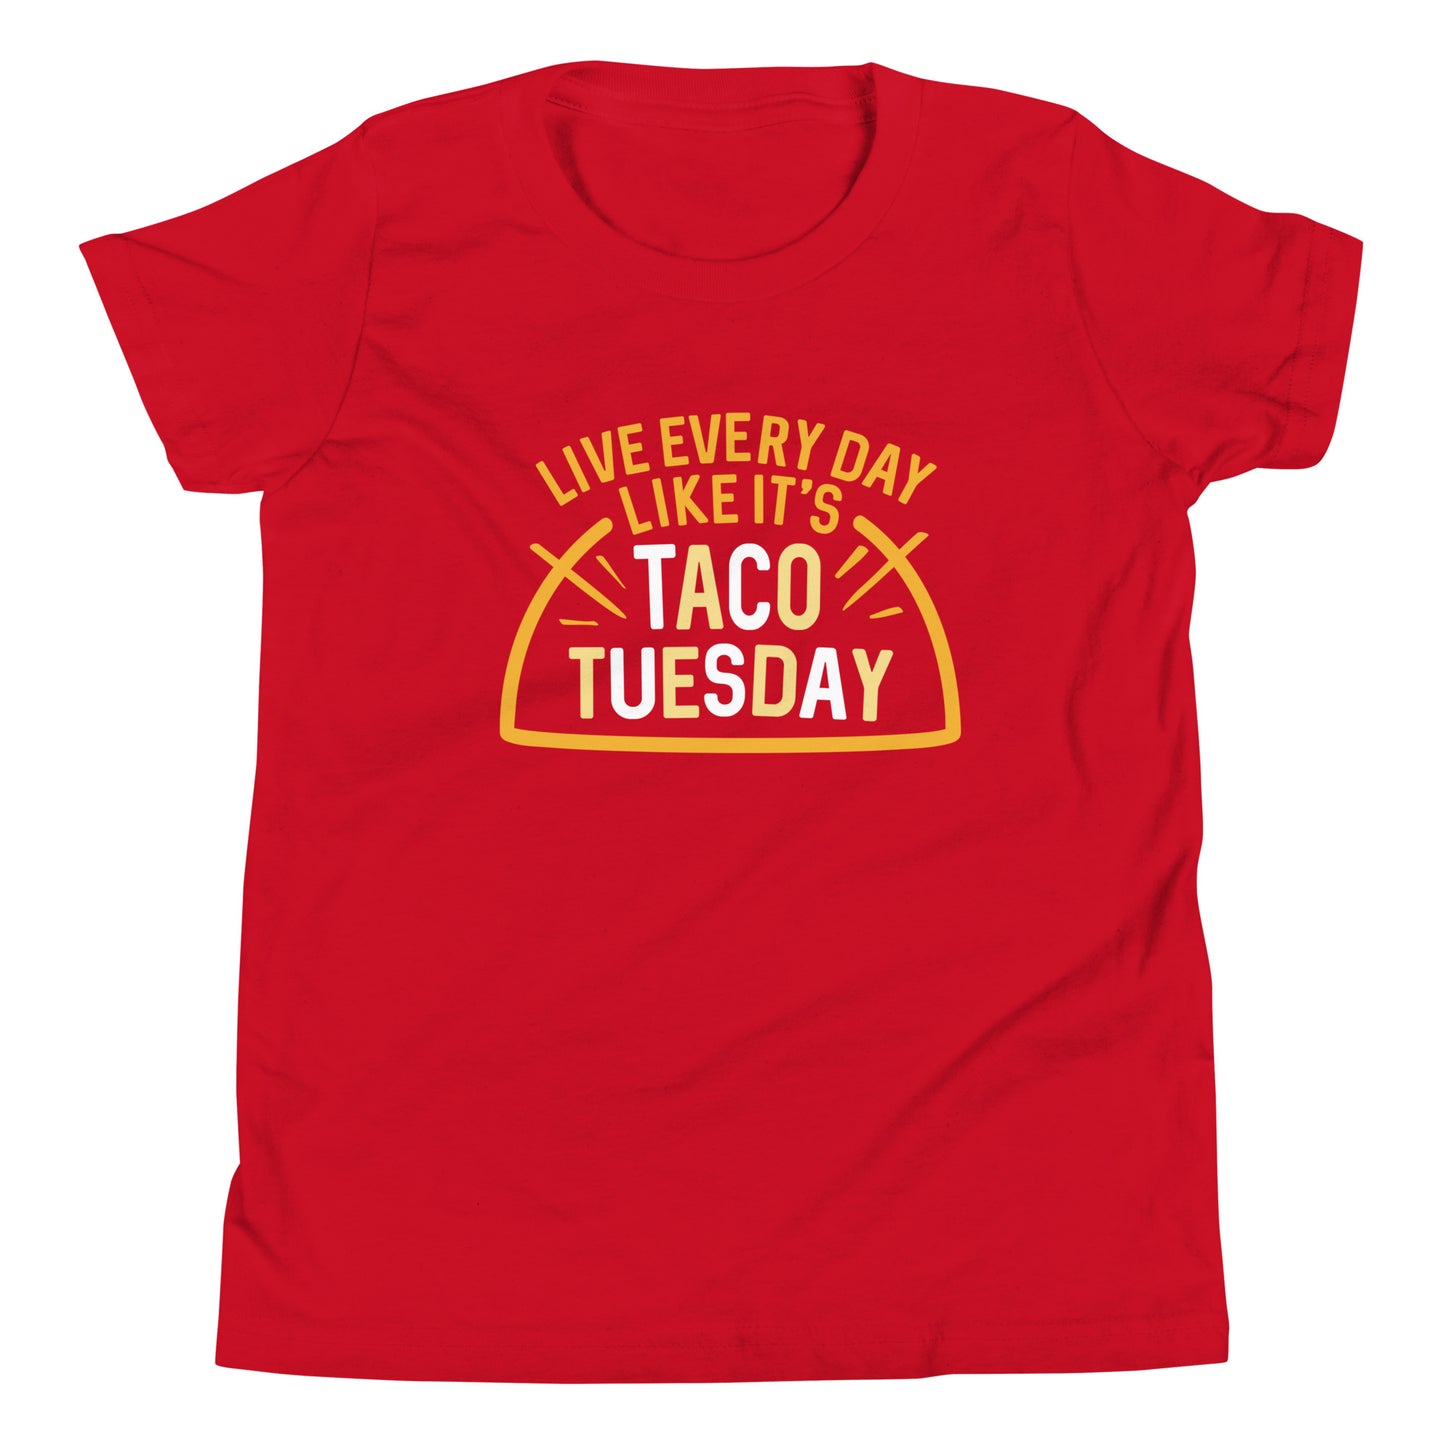 Taco Tuesday Kid's Youth Tee